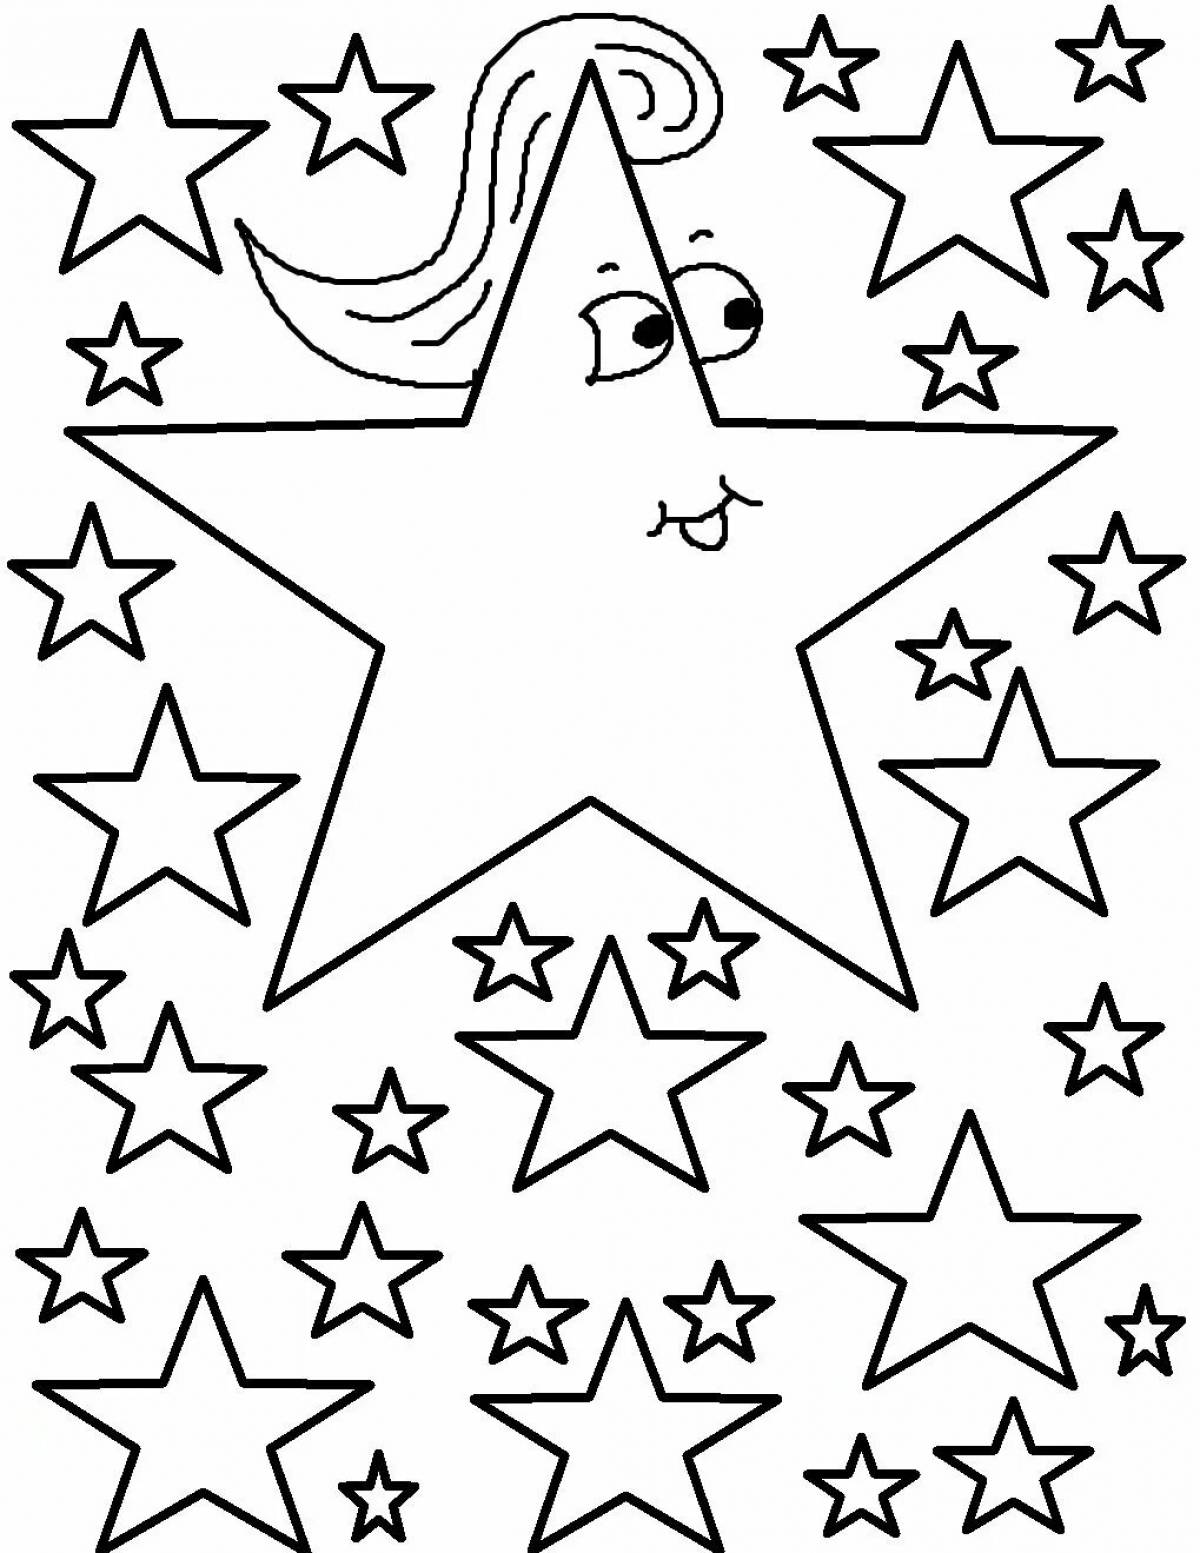 Star pattern #5